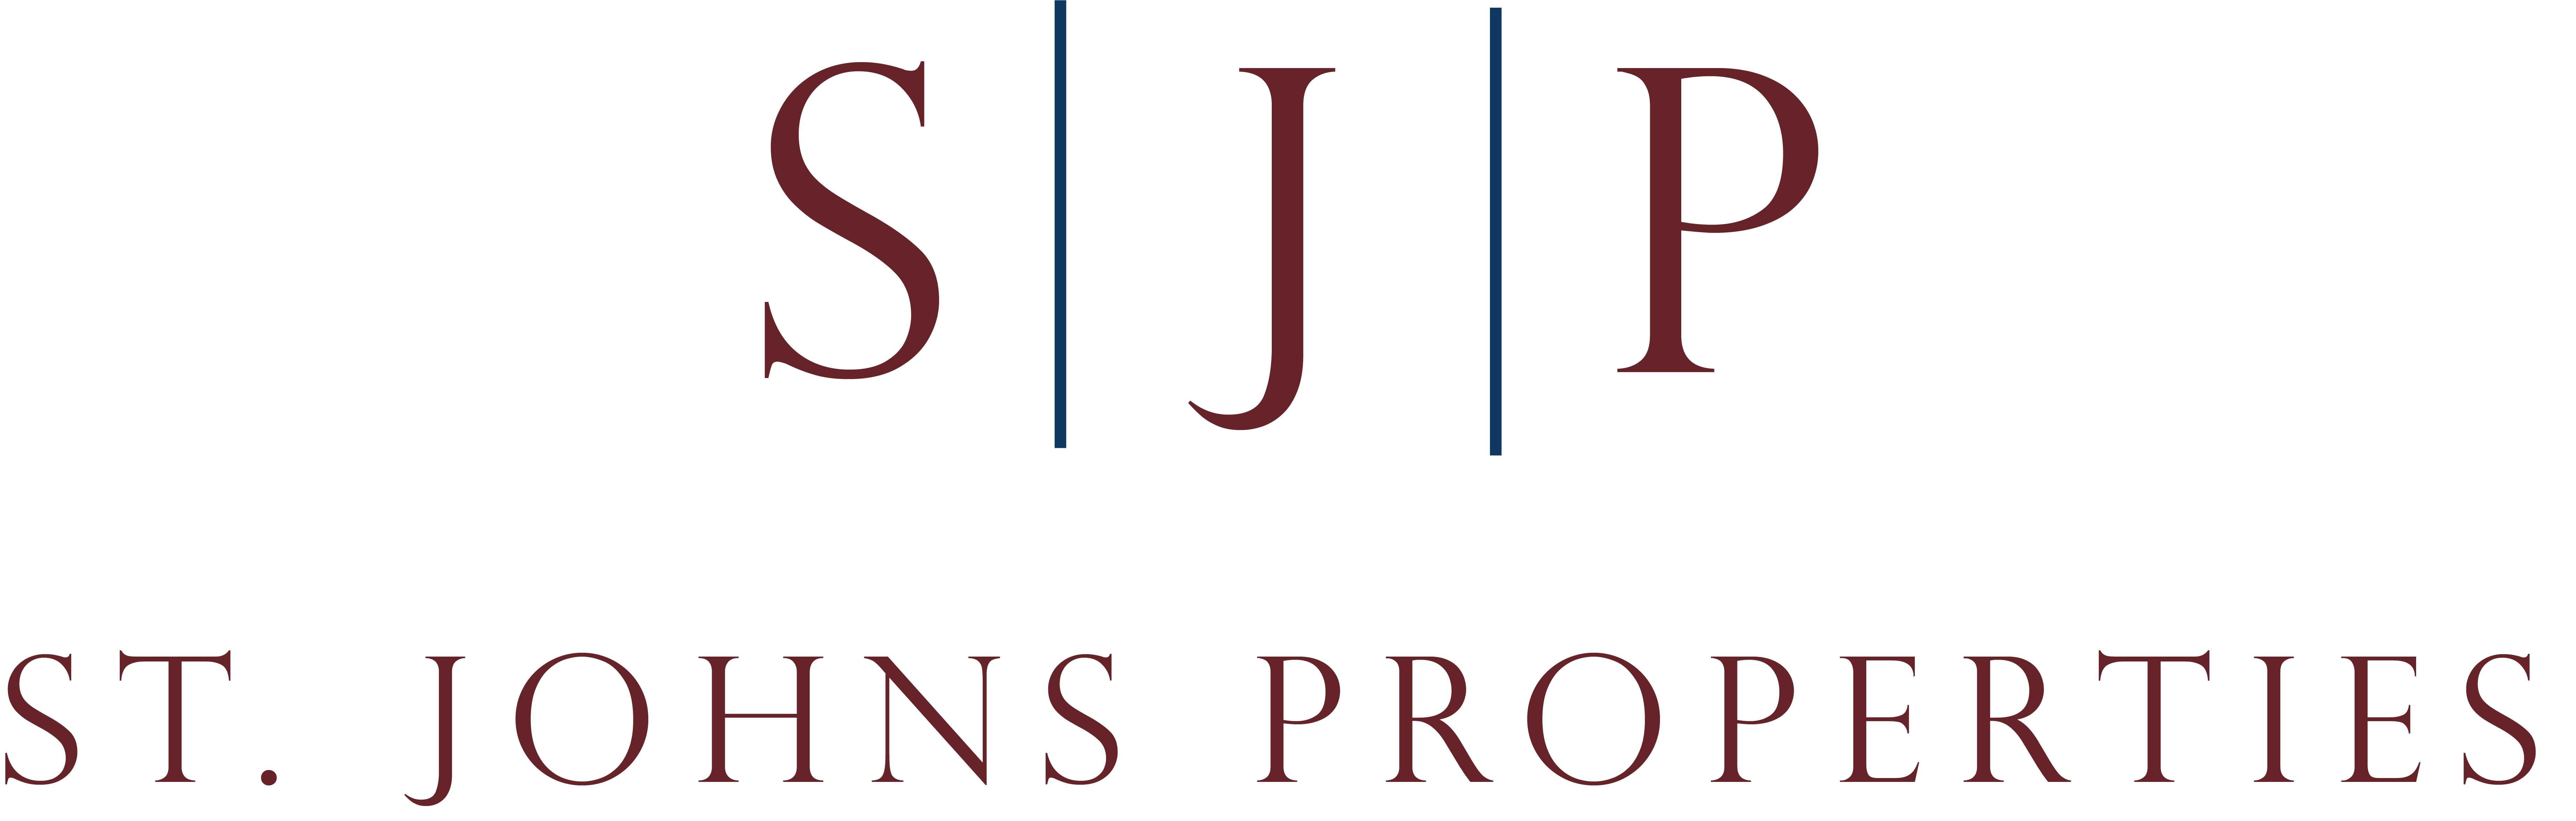 St. Johns Properties